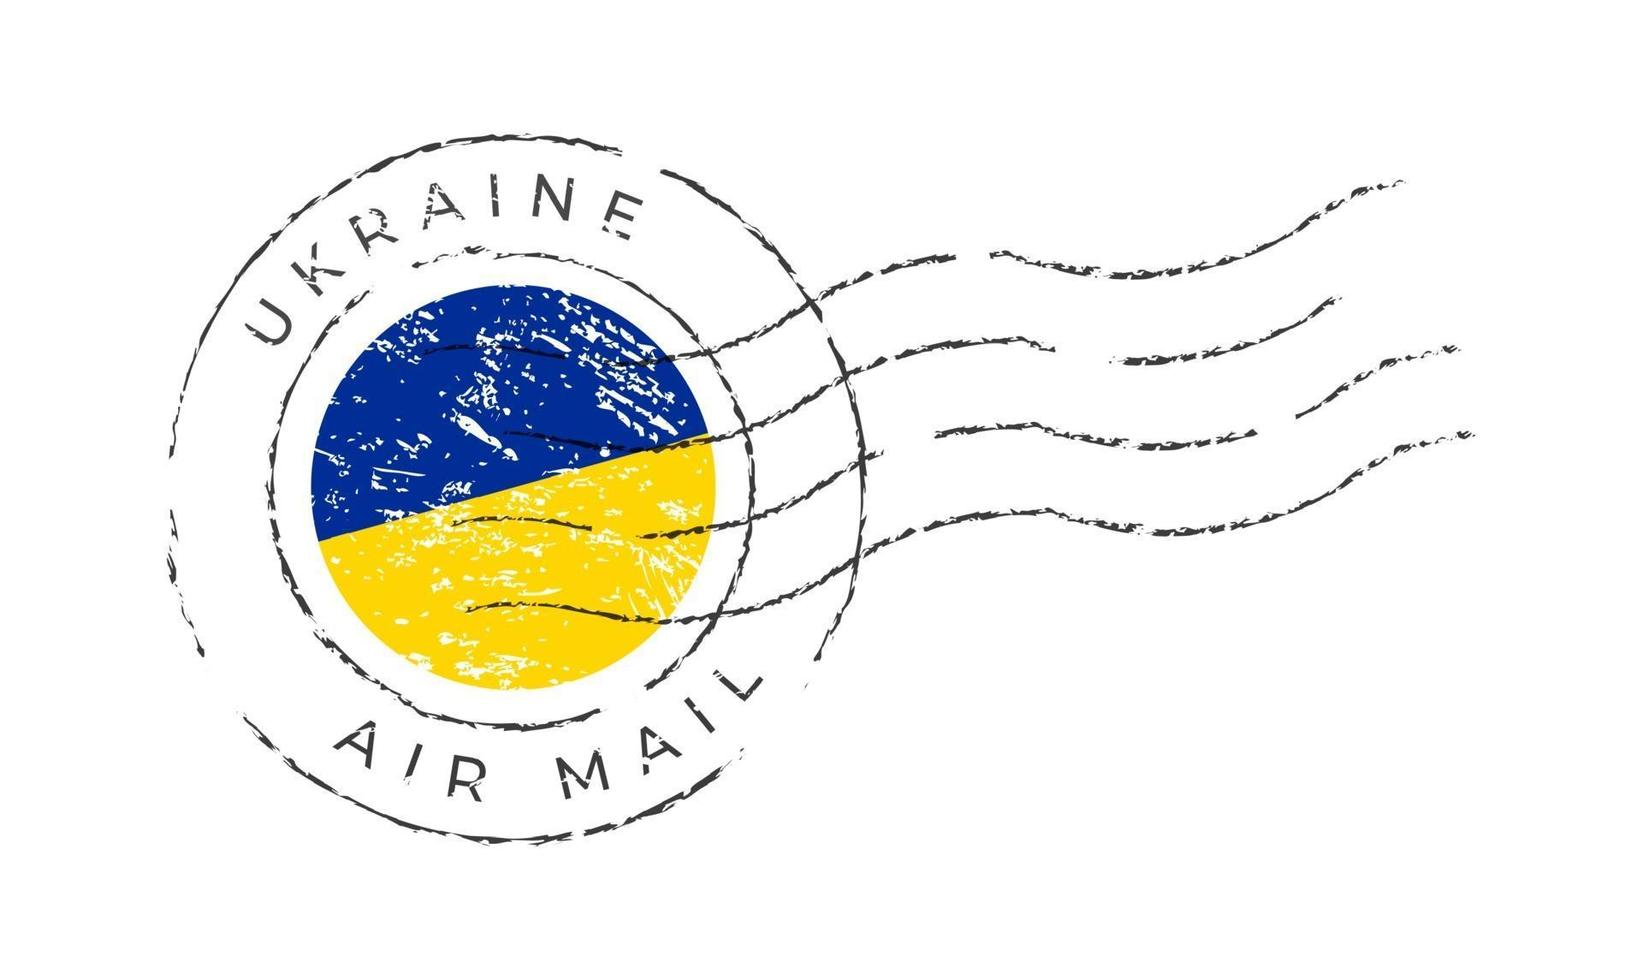 marca postal de Ucrania. sello postal de la bandera nacional vector